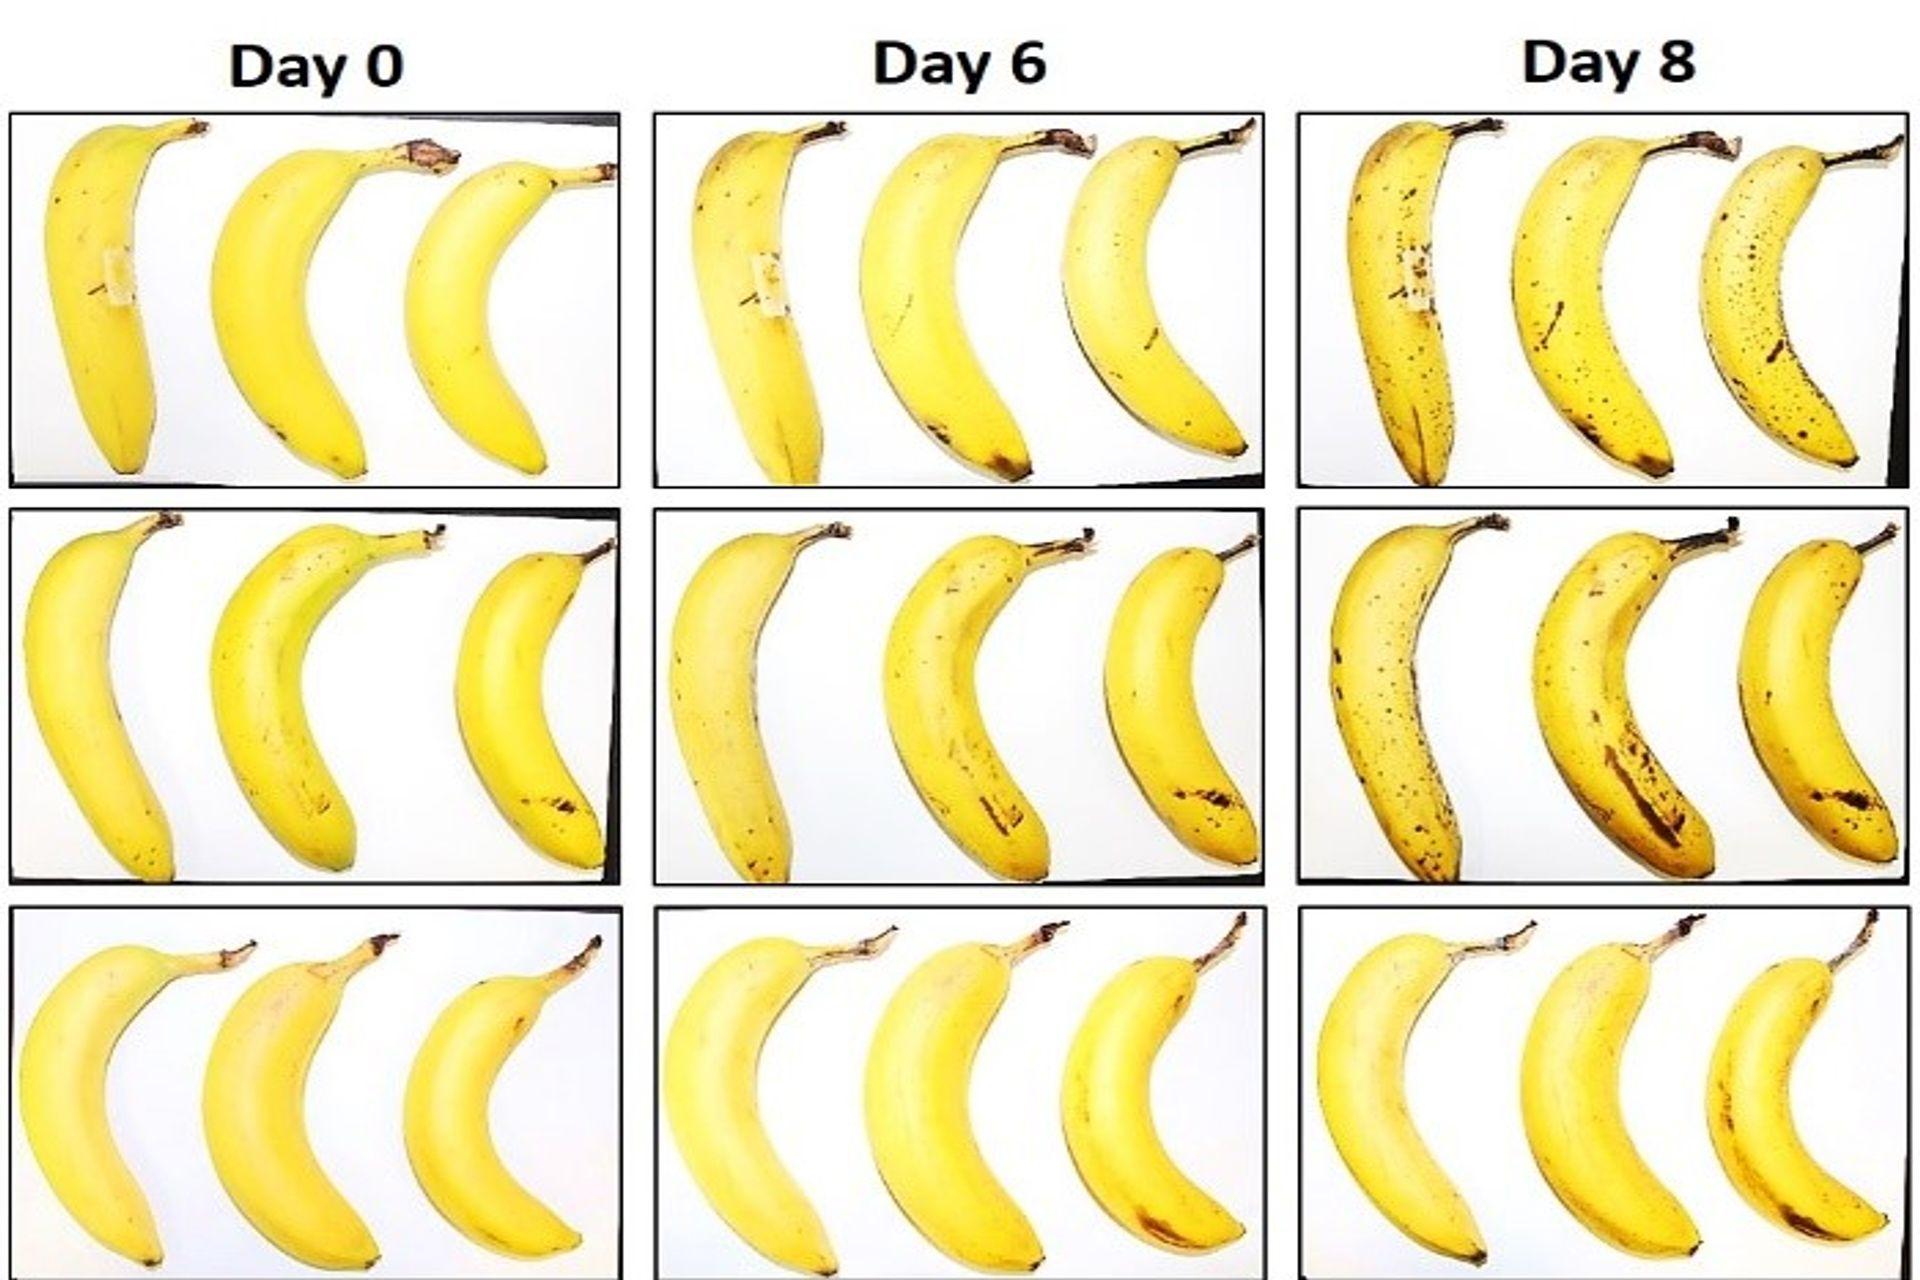 EMPA 和 Lidl Switzerland 在 6、8 和 XNUMX 天后对有和没有纤维状纤维素包裹的三种香蕉进行了保存测试